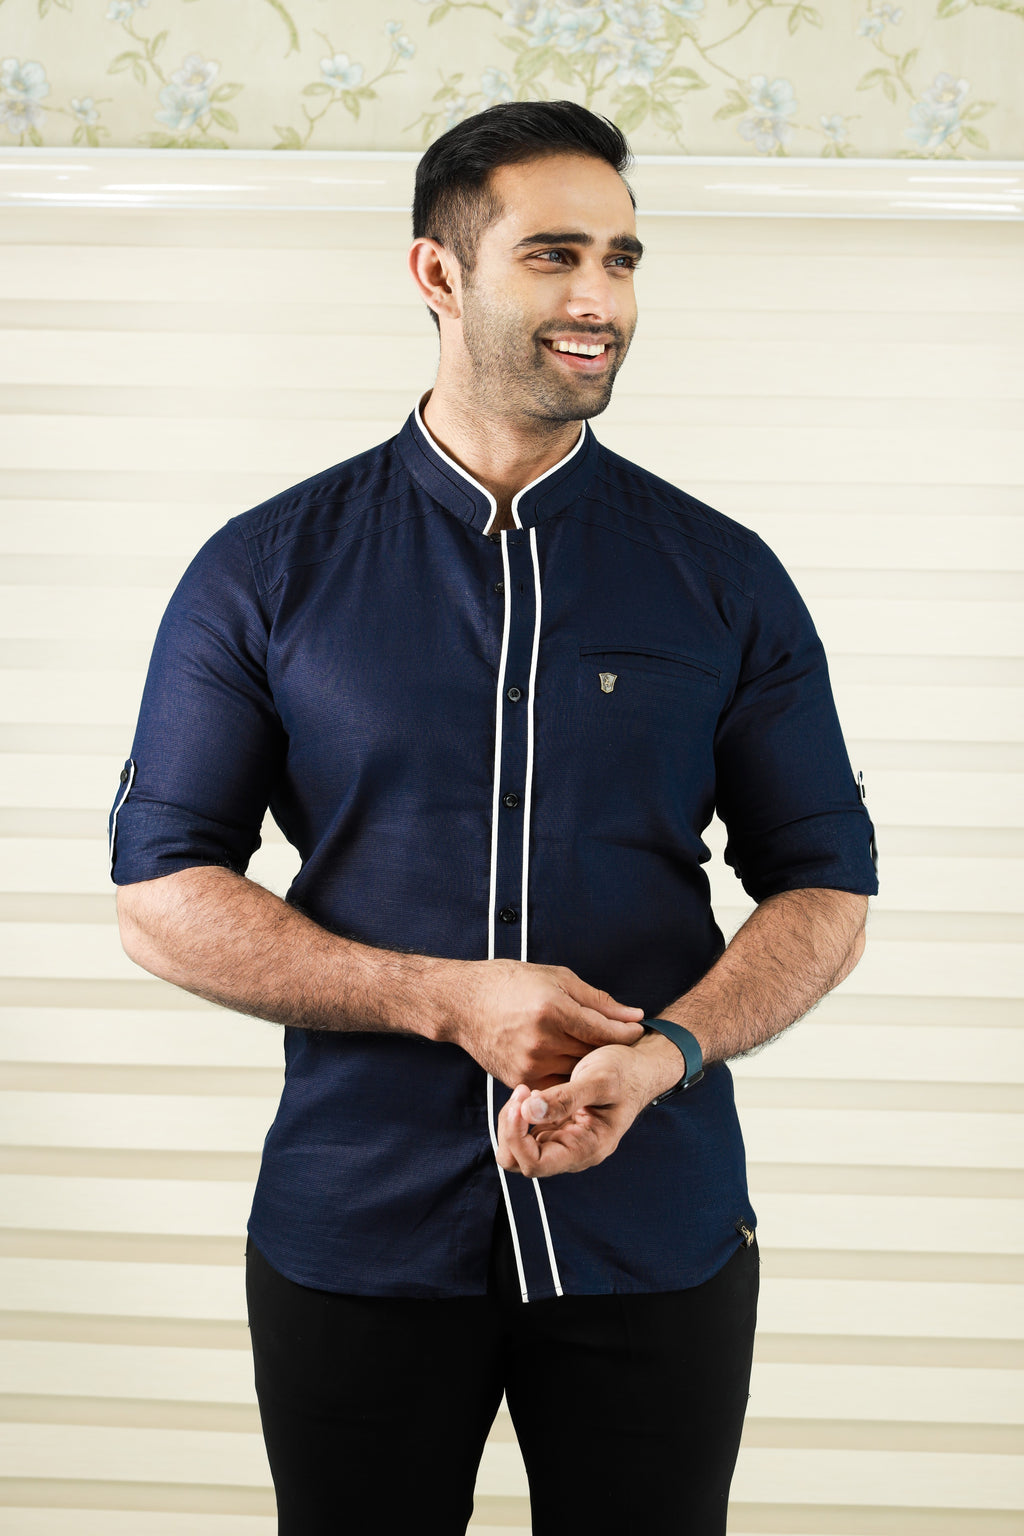 Dark Blue Shirt with White Contrast Detailing on Neck & Placket (Shirt –  archerslounge